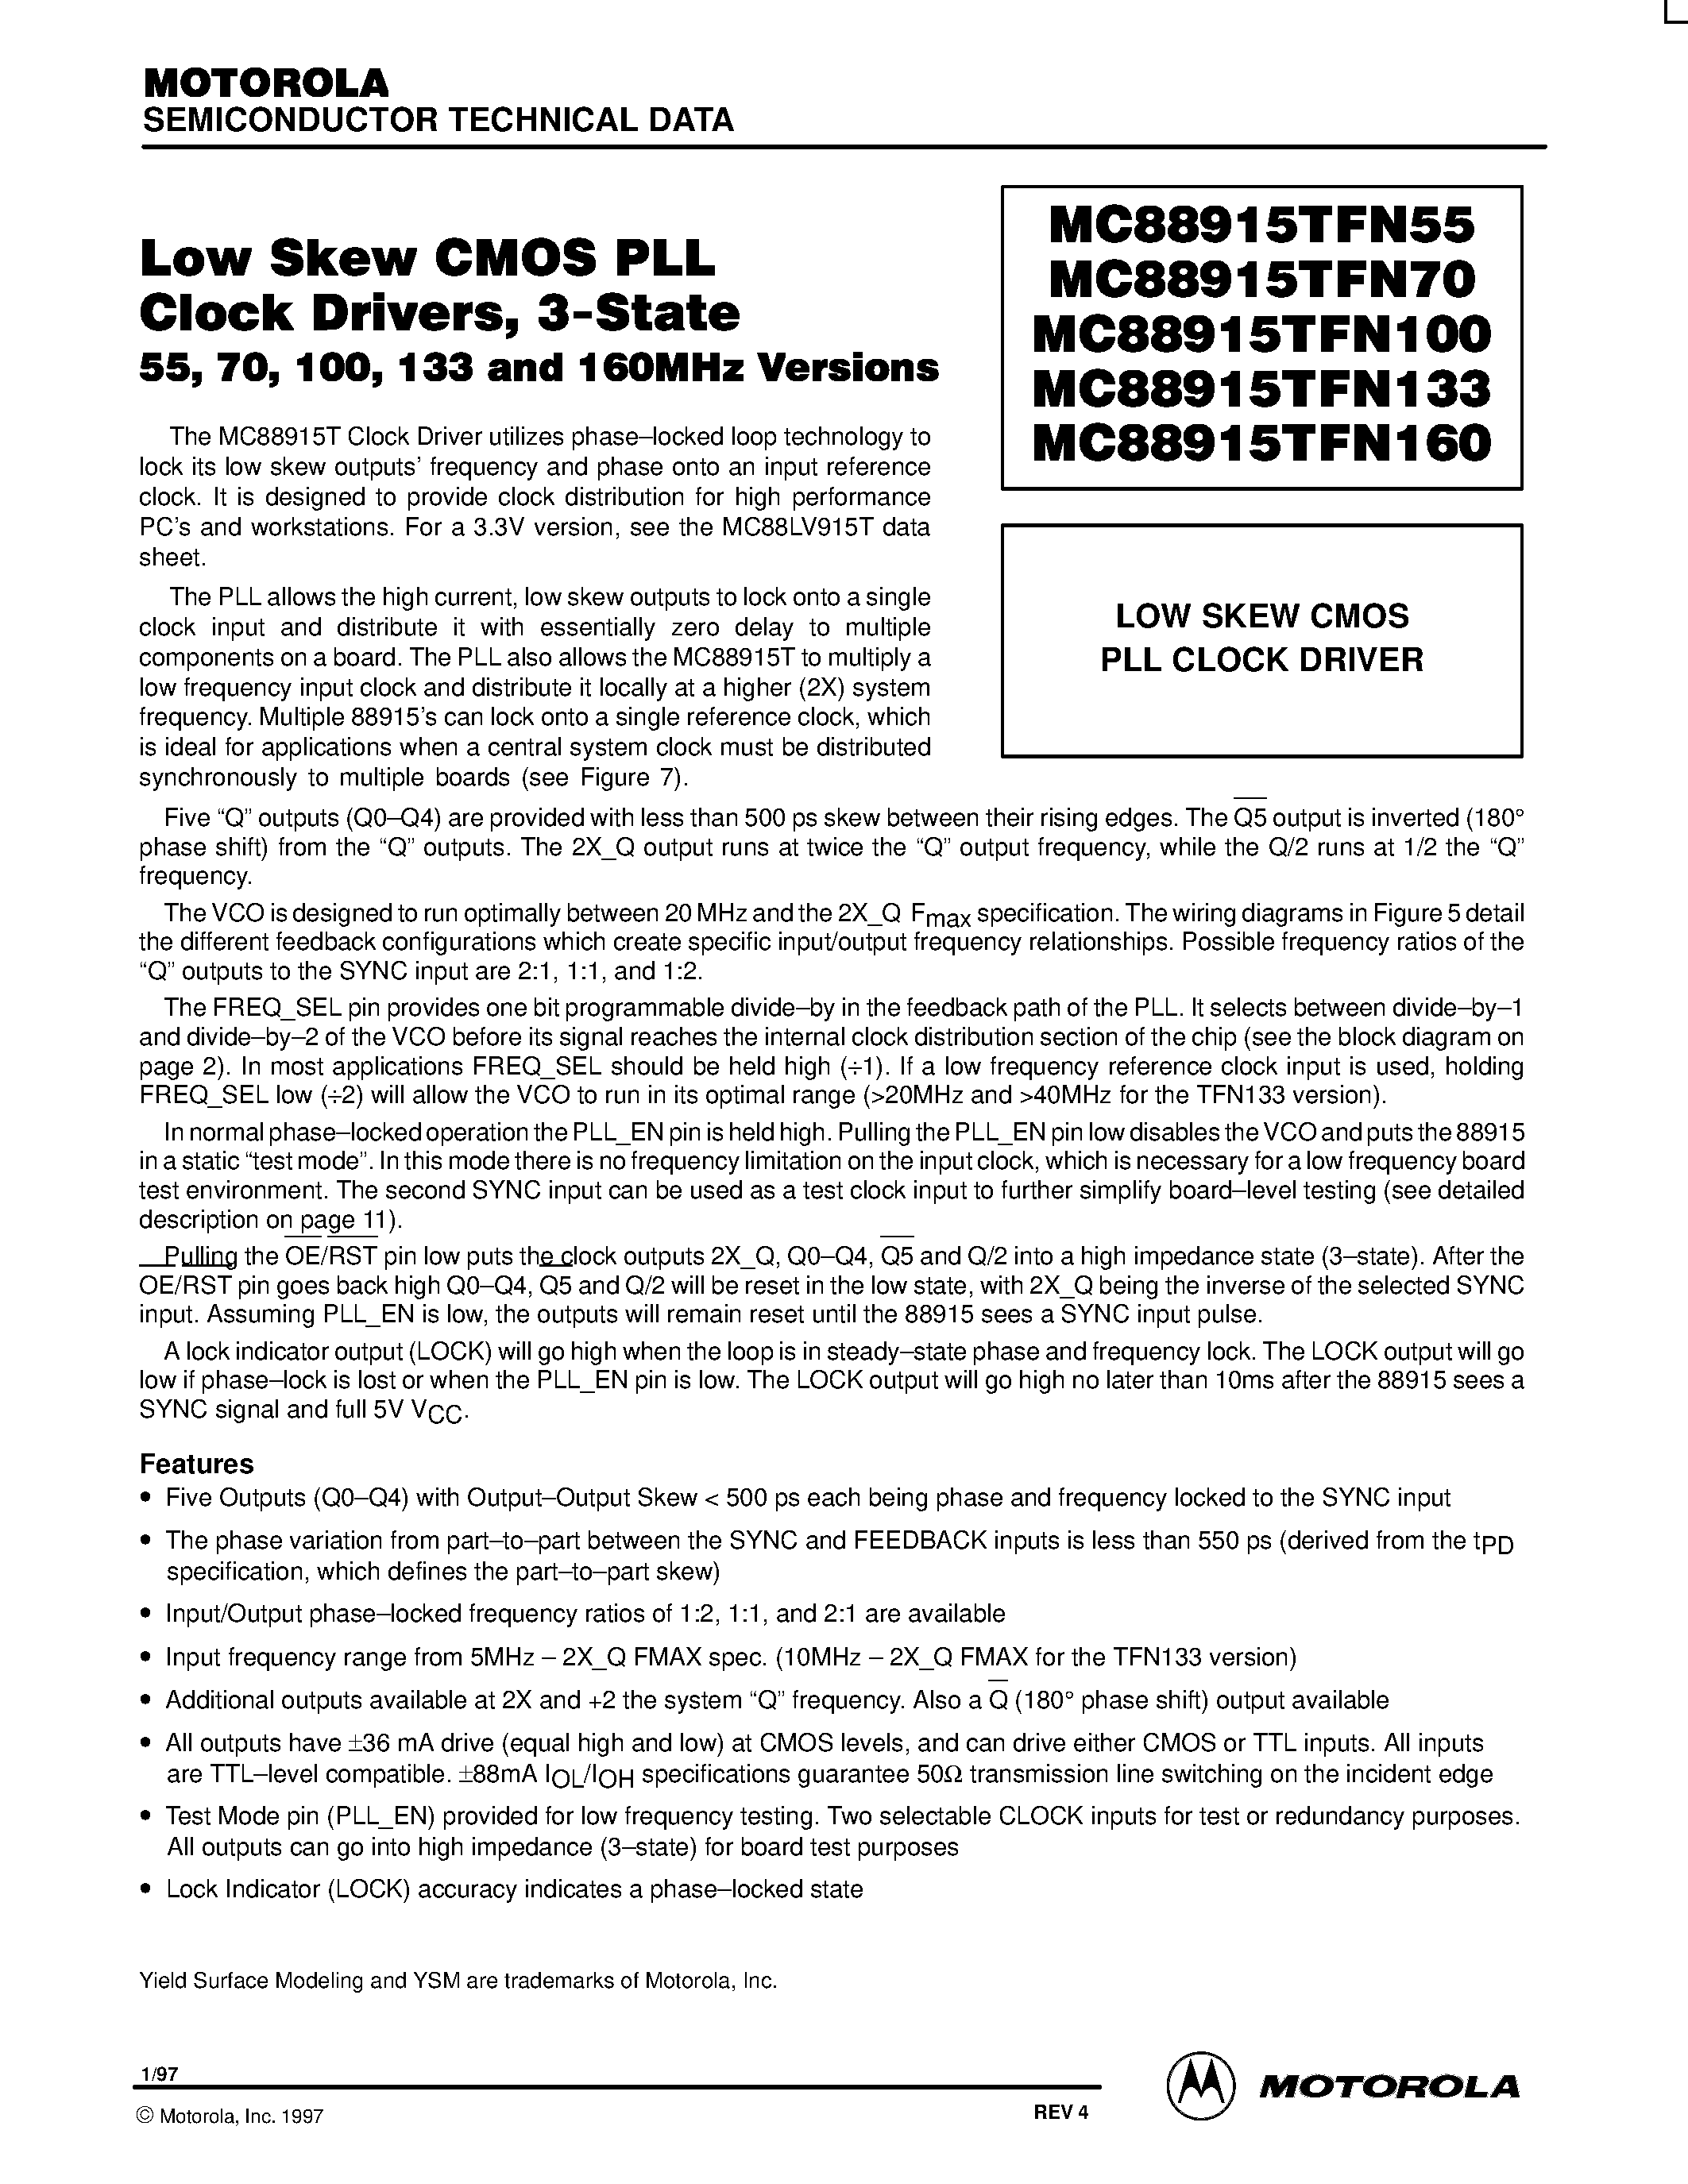 Datasheet MC88915TFN160 - LOW SKEW CMOS PLL CLOCK DRIVER page 1